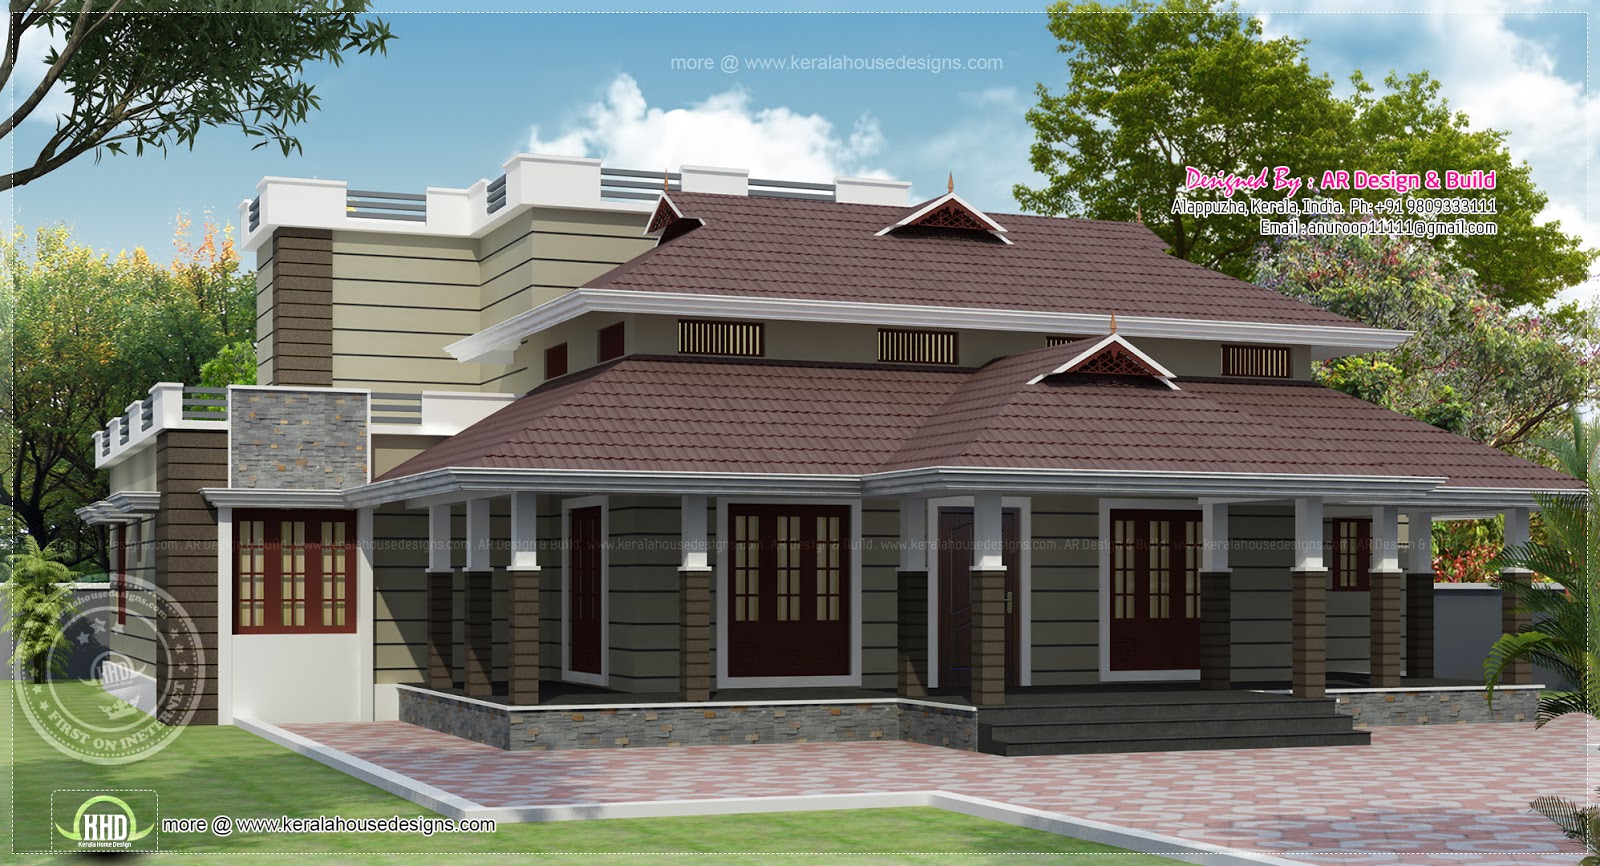  Nalukettu  Kerala house  in 2730 sq ft Home  Kerala Plans 